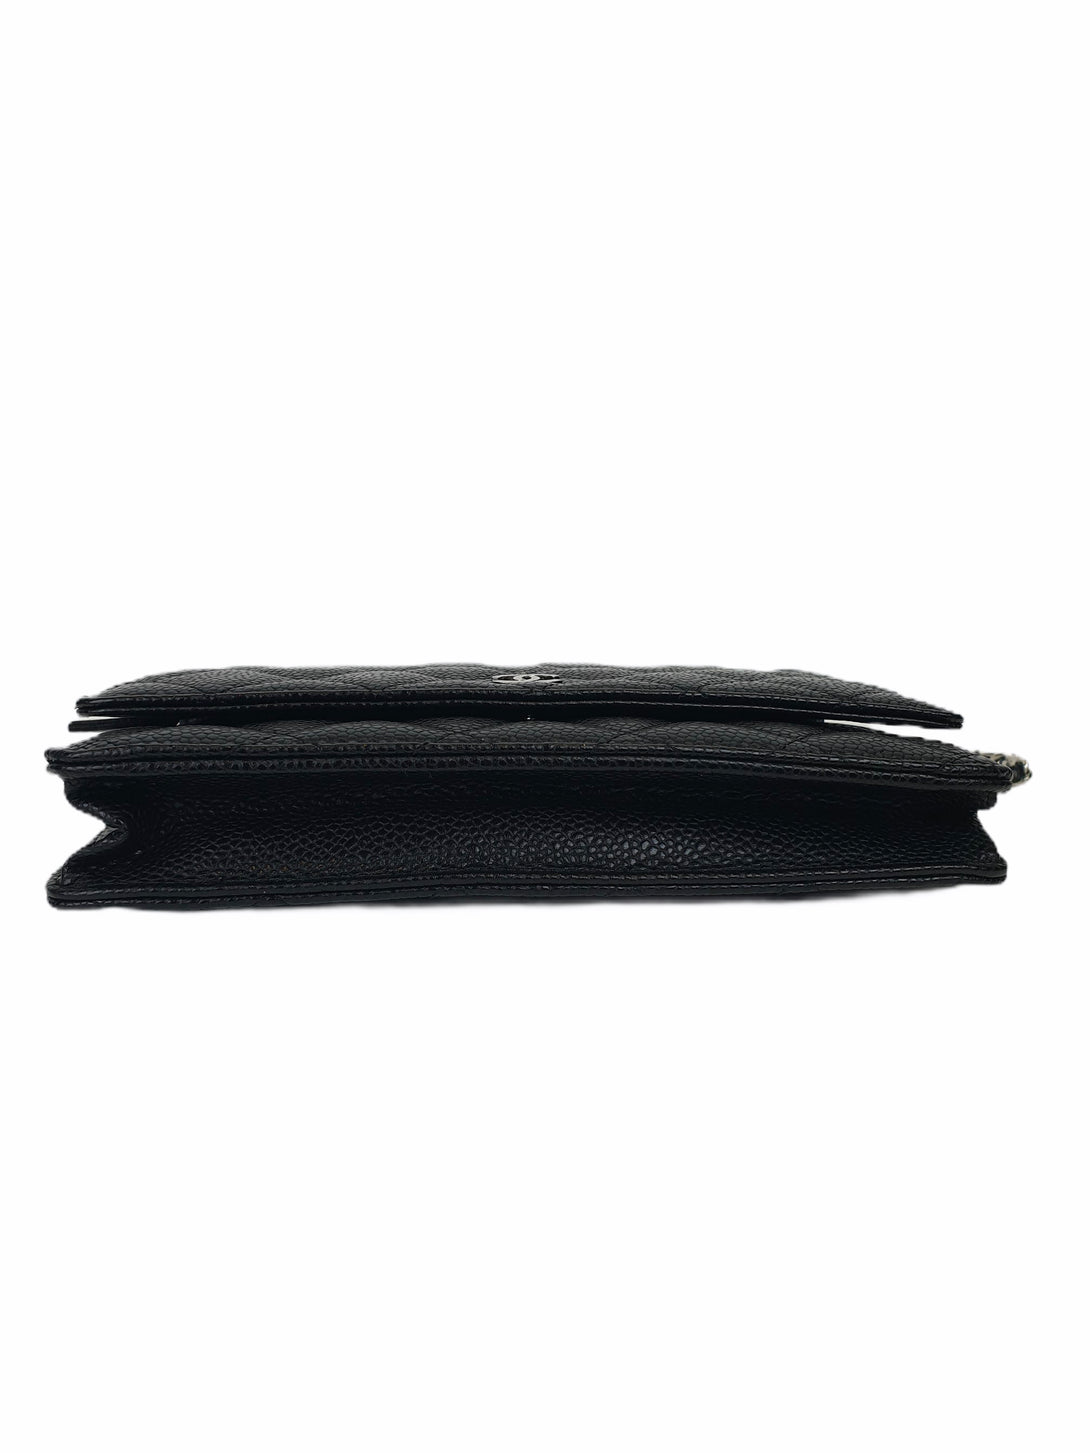 Chanel Black "Wallet on Chain" Crossbody - As seen on Instagram 29/07/20 - Siopaella Designer Exchange